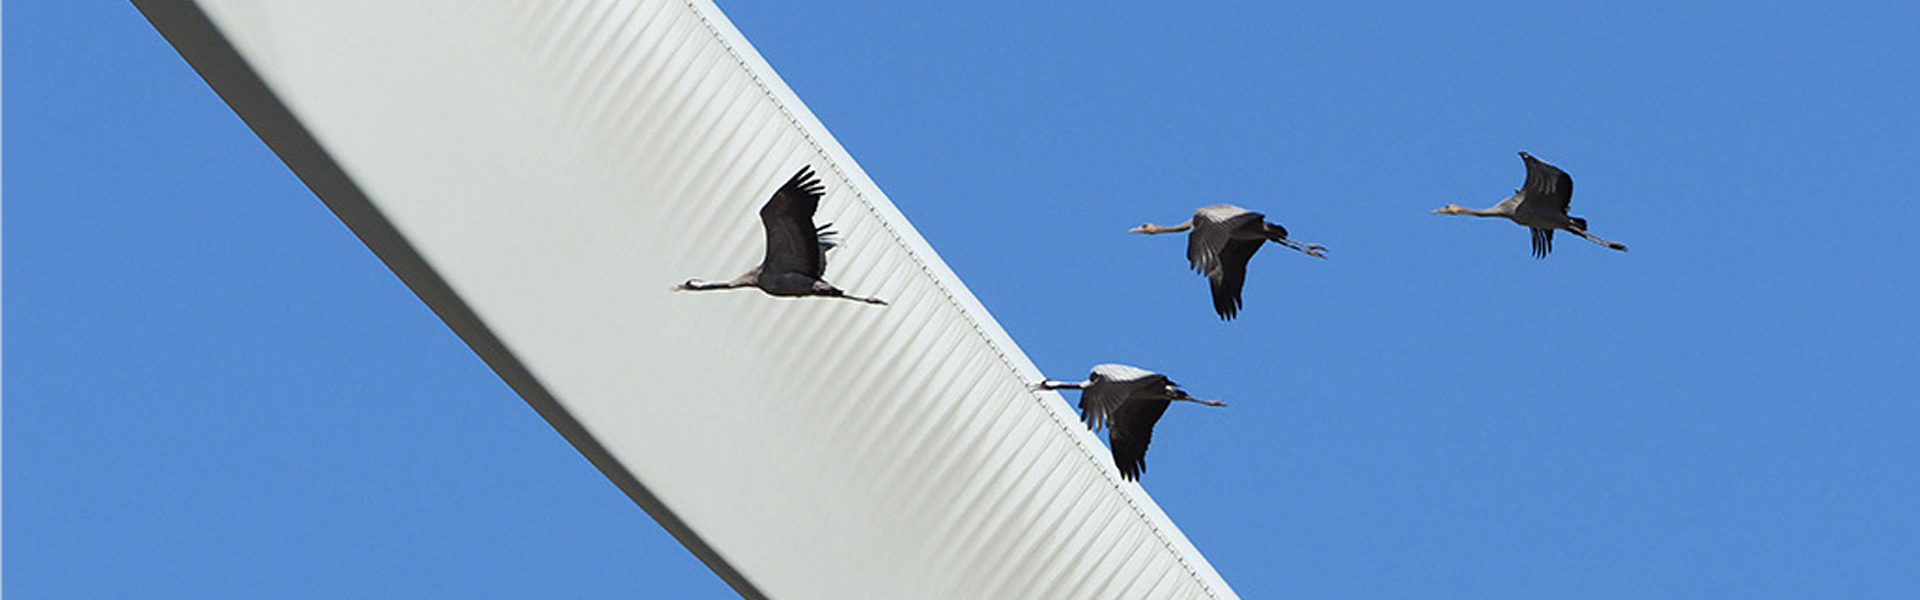 Zugvögel fliegen an Windrad vorbei